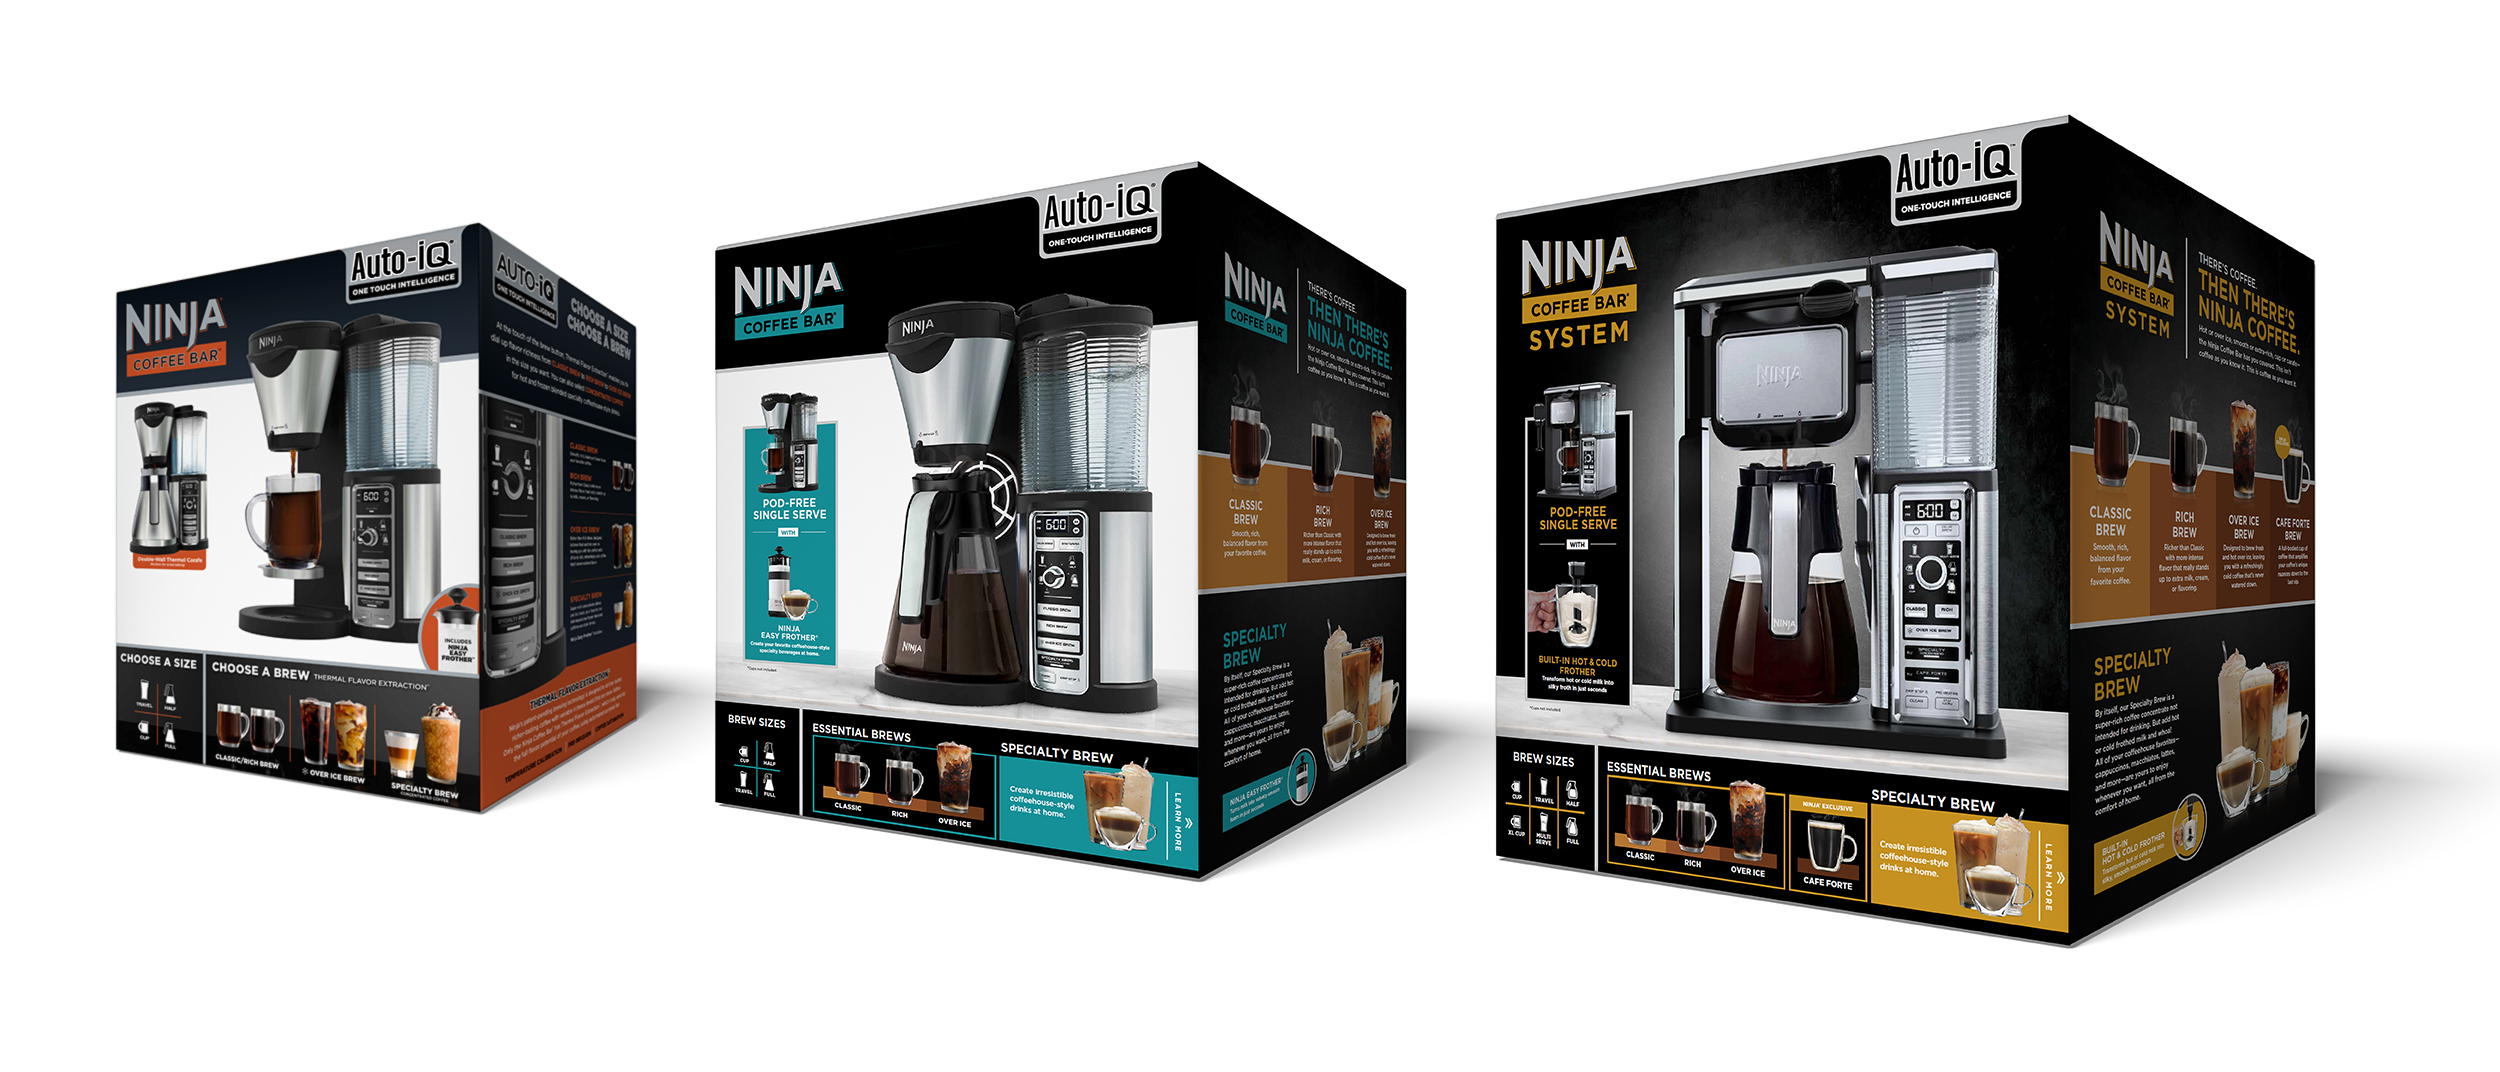 Ninja Coffee Bar Auto-IQ One Touch Intelligence Coffee Maker CF080